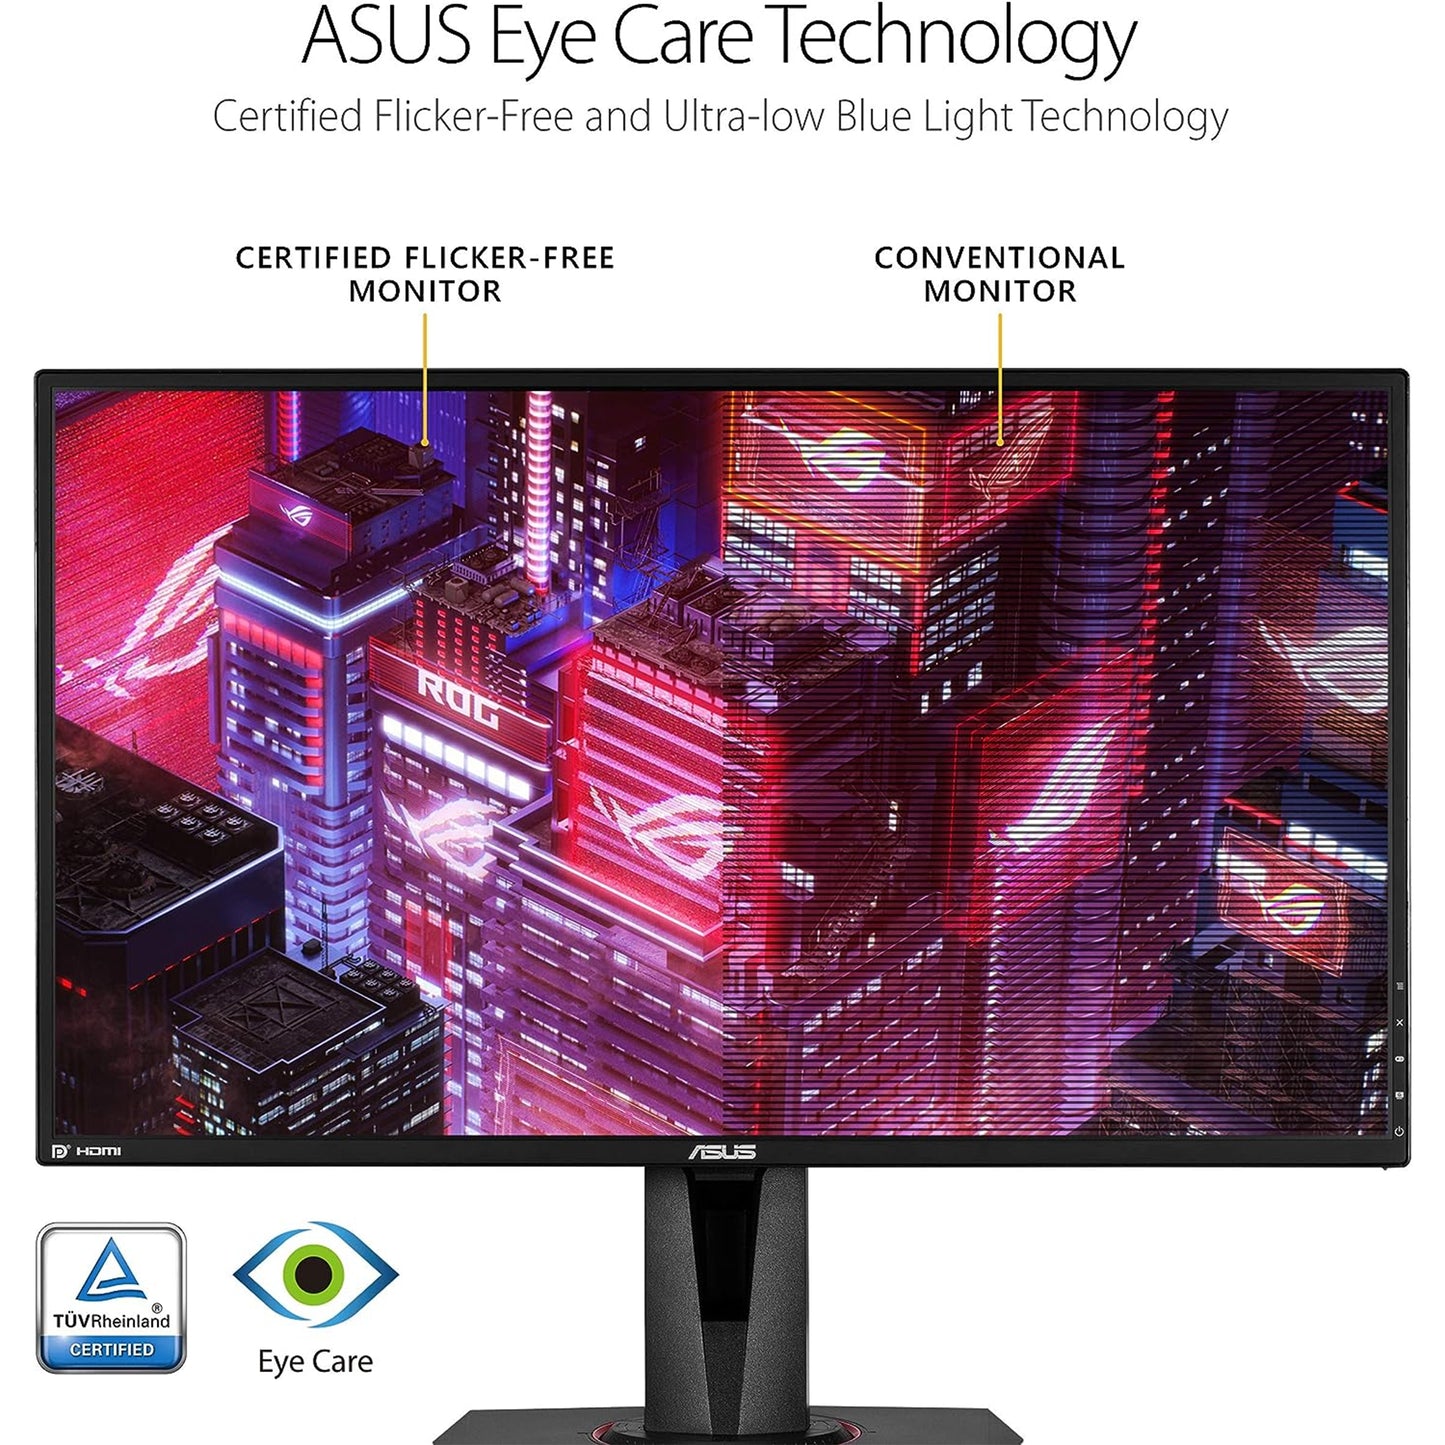 ASUS TUF Gaming 27" 2K HDR Gaming Monitor (VG27AQ) - QHD (2560 x 1440), 165Hz (Supports 144Hz), 1ms, Extreme Low Motion Blur, Speaker, G-SYNC Compatible, VESA Mountable, DisplayPort, HDMI ,Black